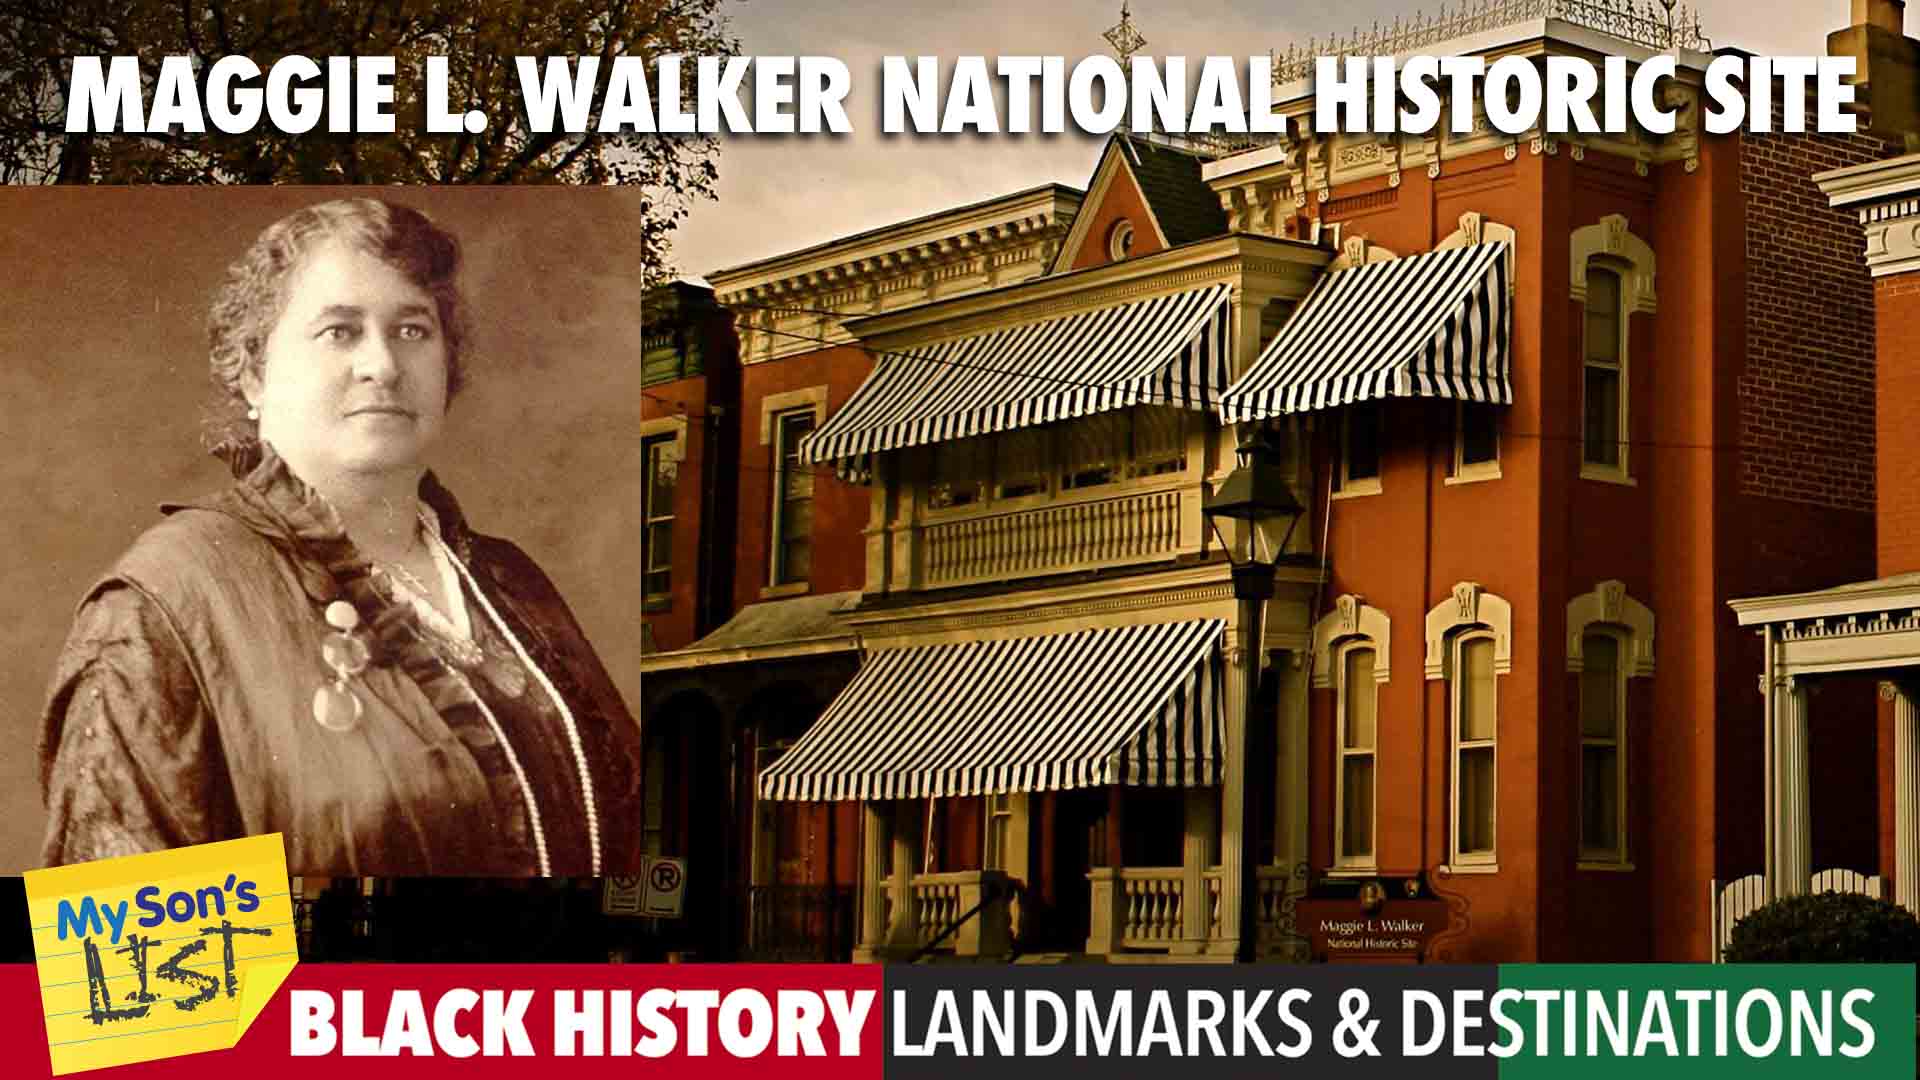 African-American Landmarks: Maggie L. Walker National Historic Site